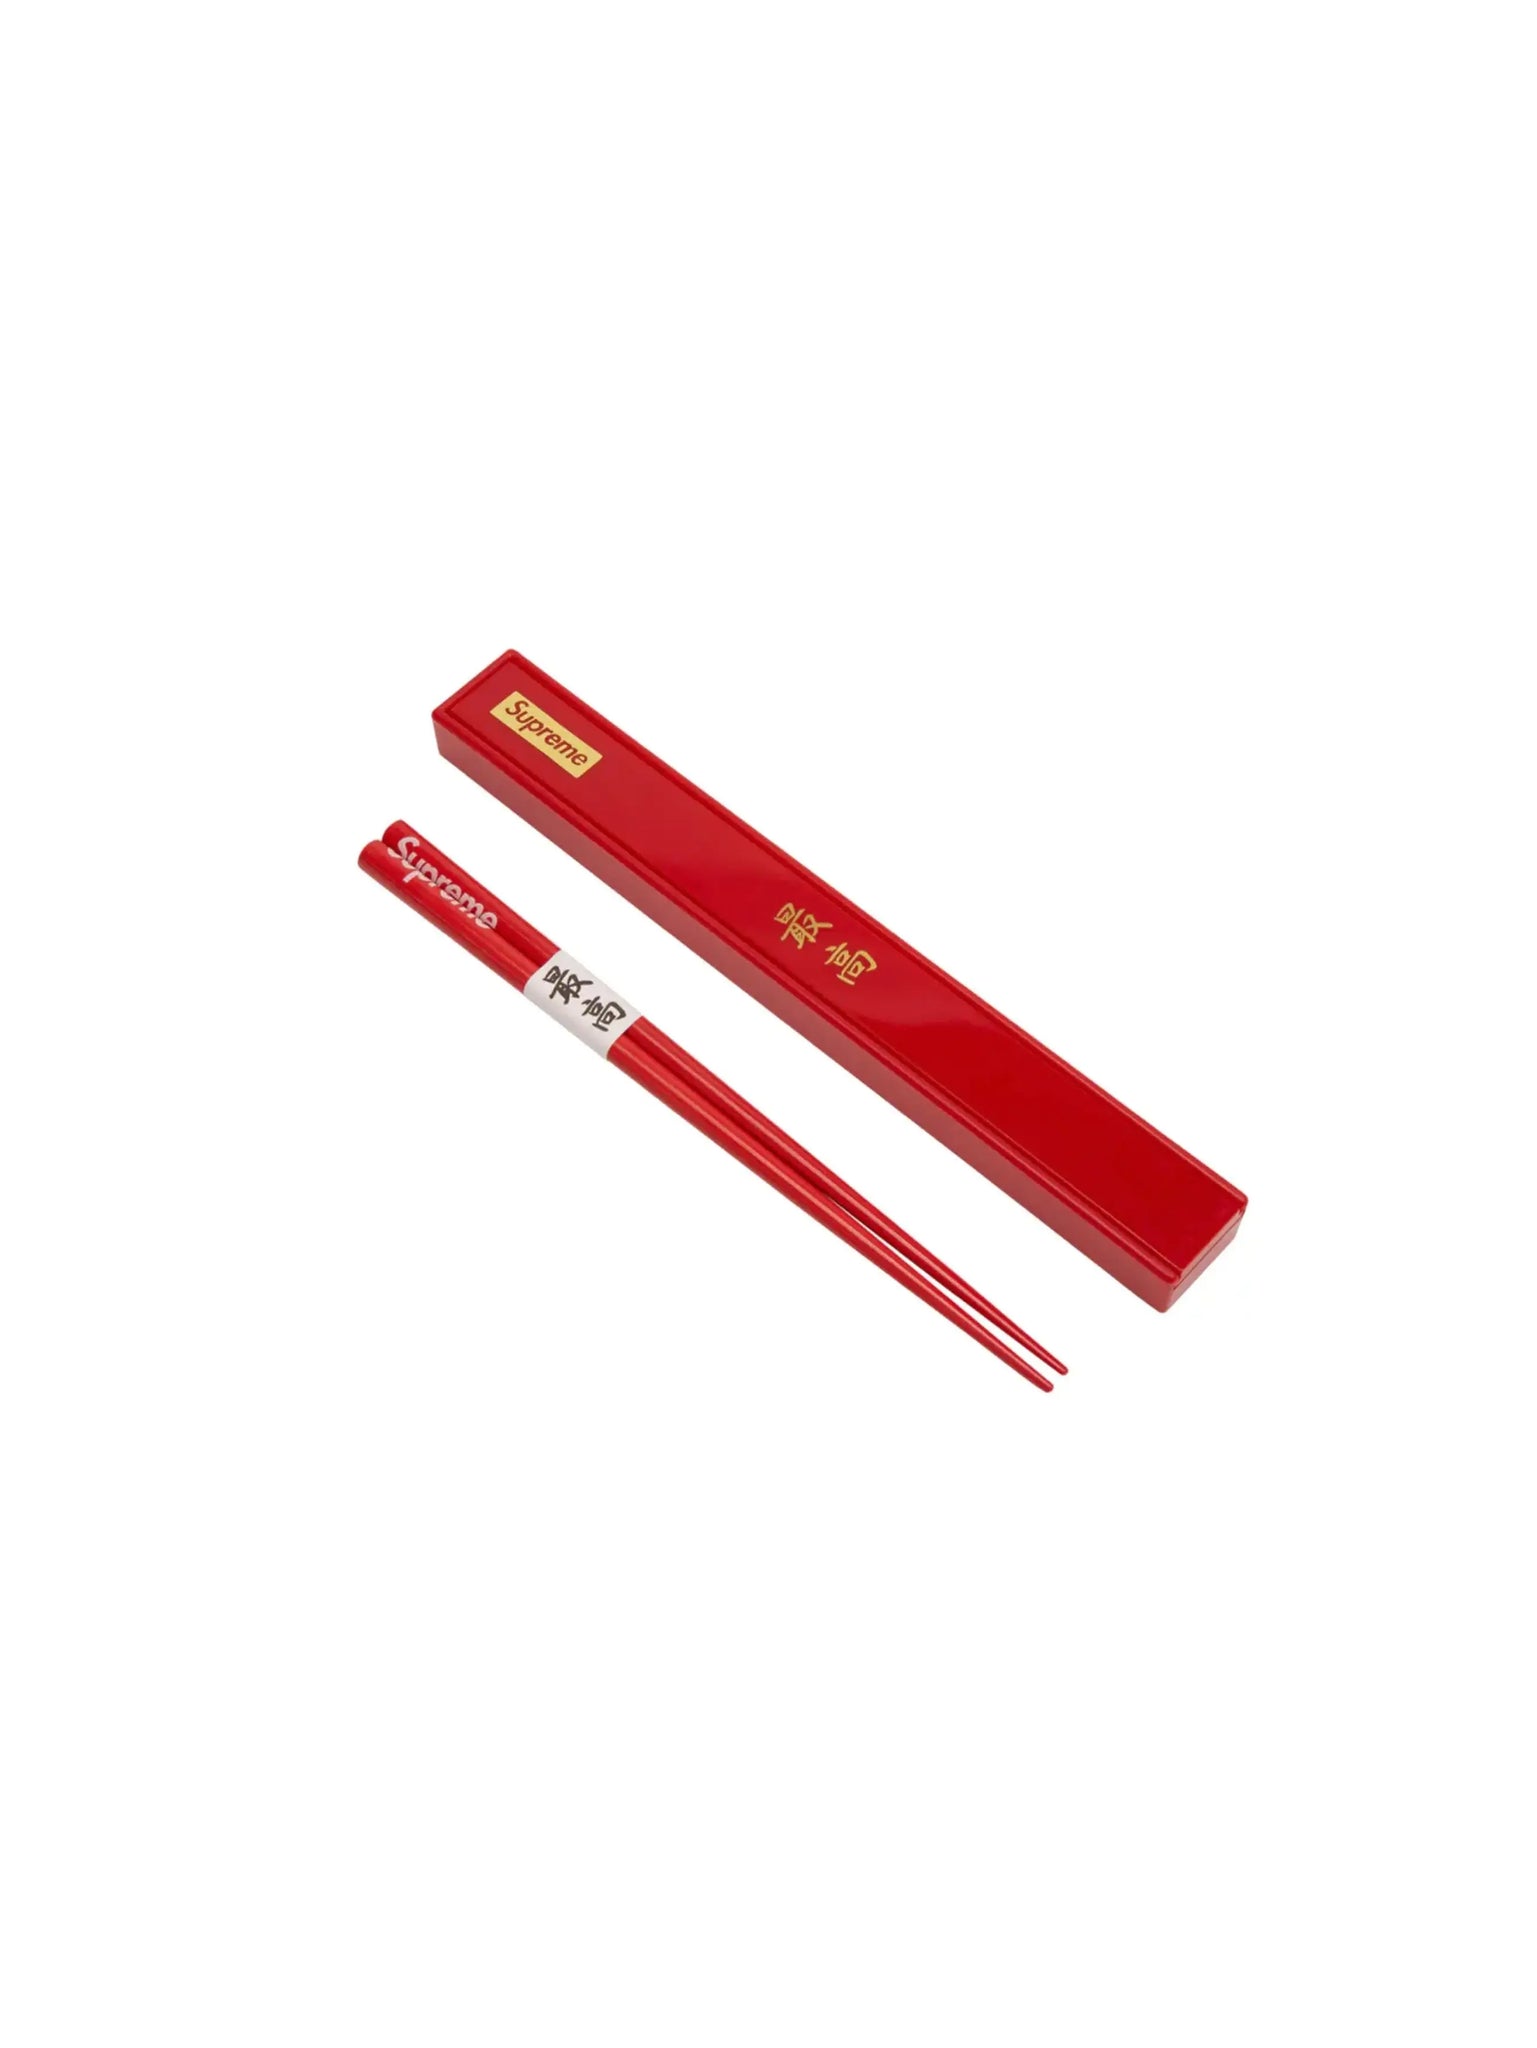 Supreme Chopsticks Set Red in Melbourne, Australia - Prior